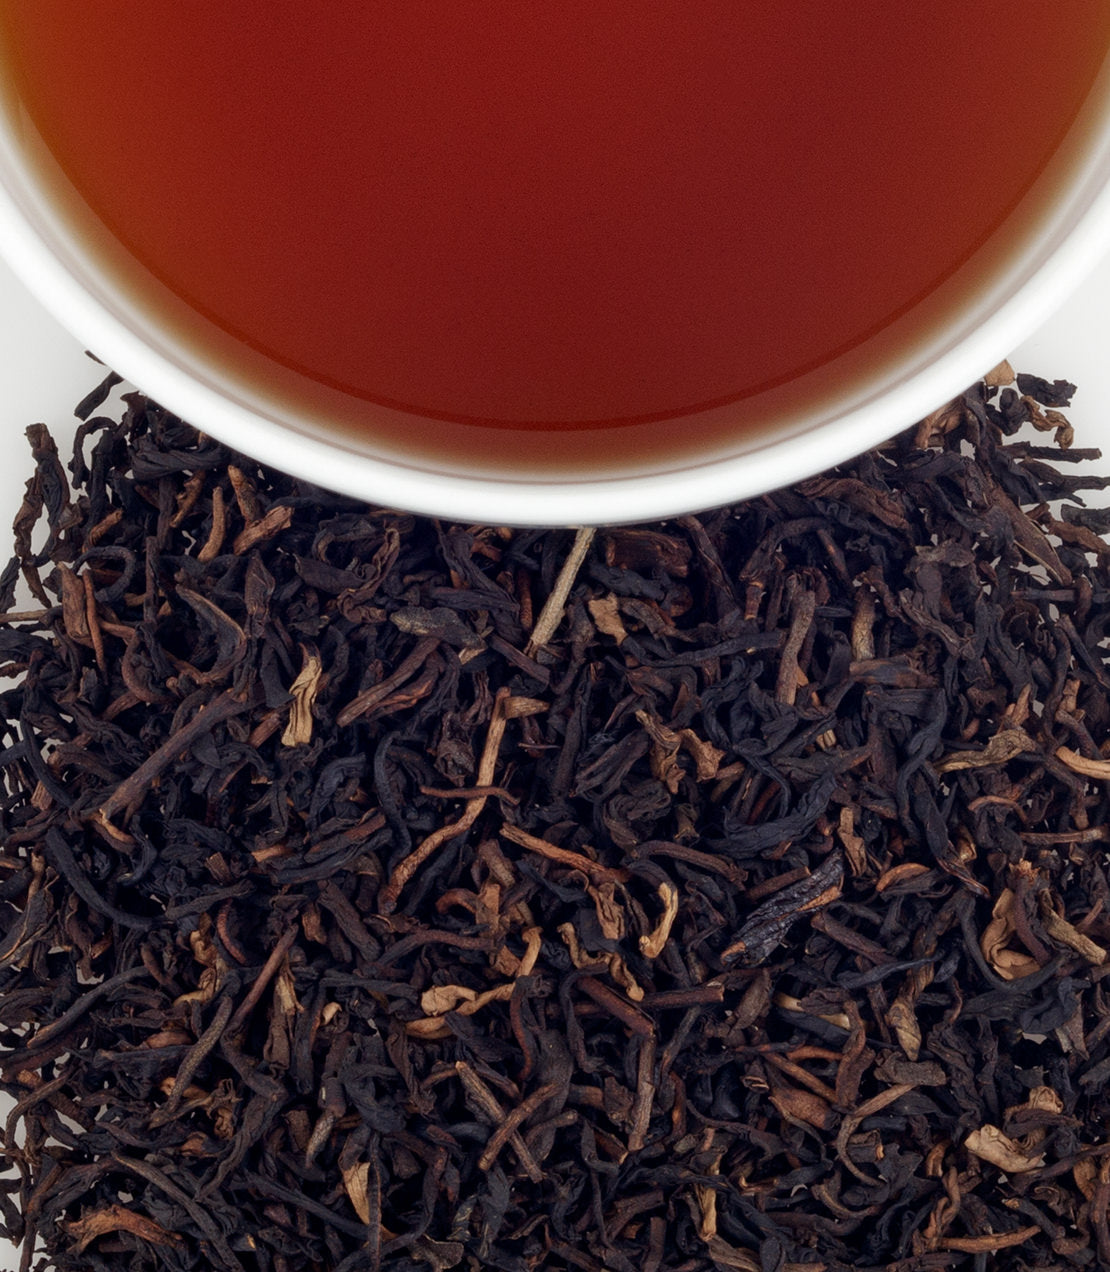 Peachy Keen - Black Tea Blend – Snarky Tea